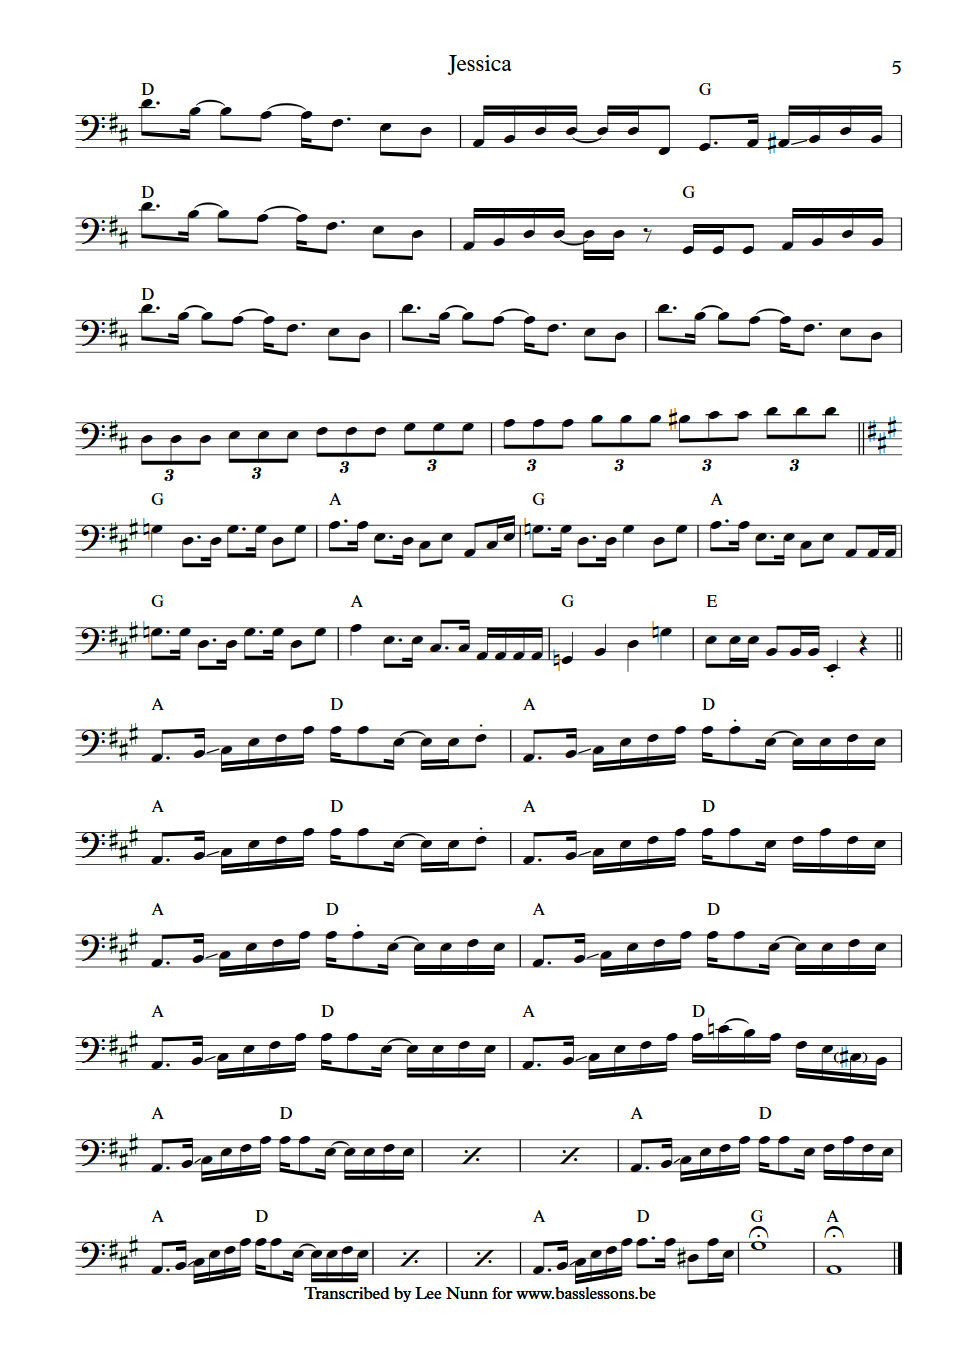 Allman Brothers Band Jessica bass transcription part 5